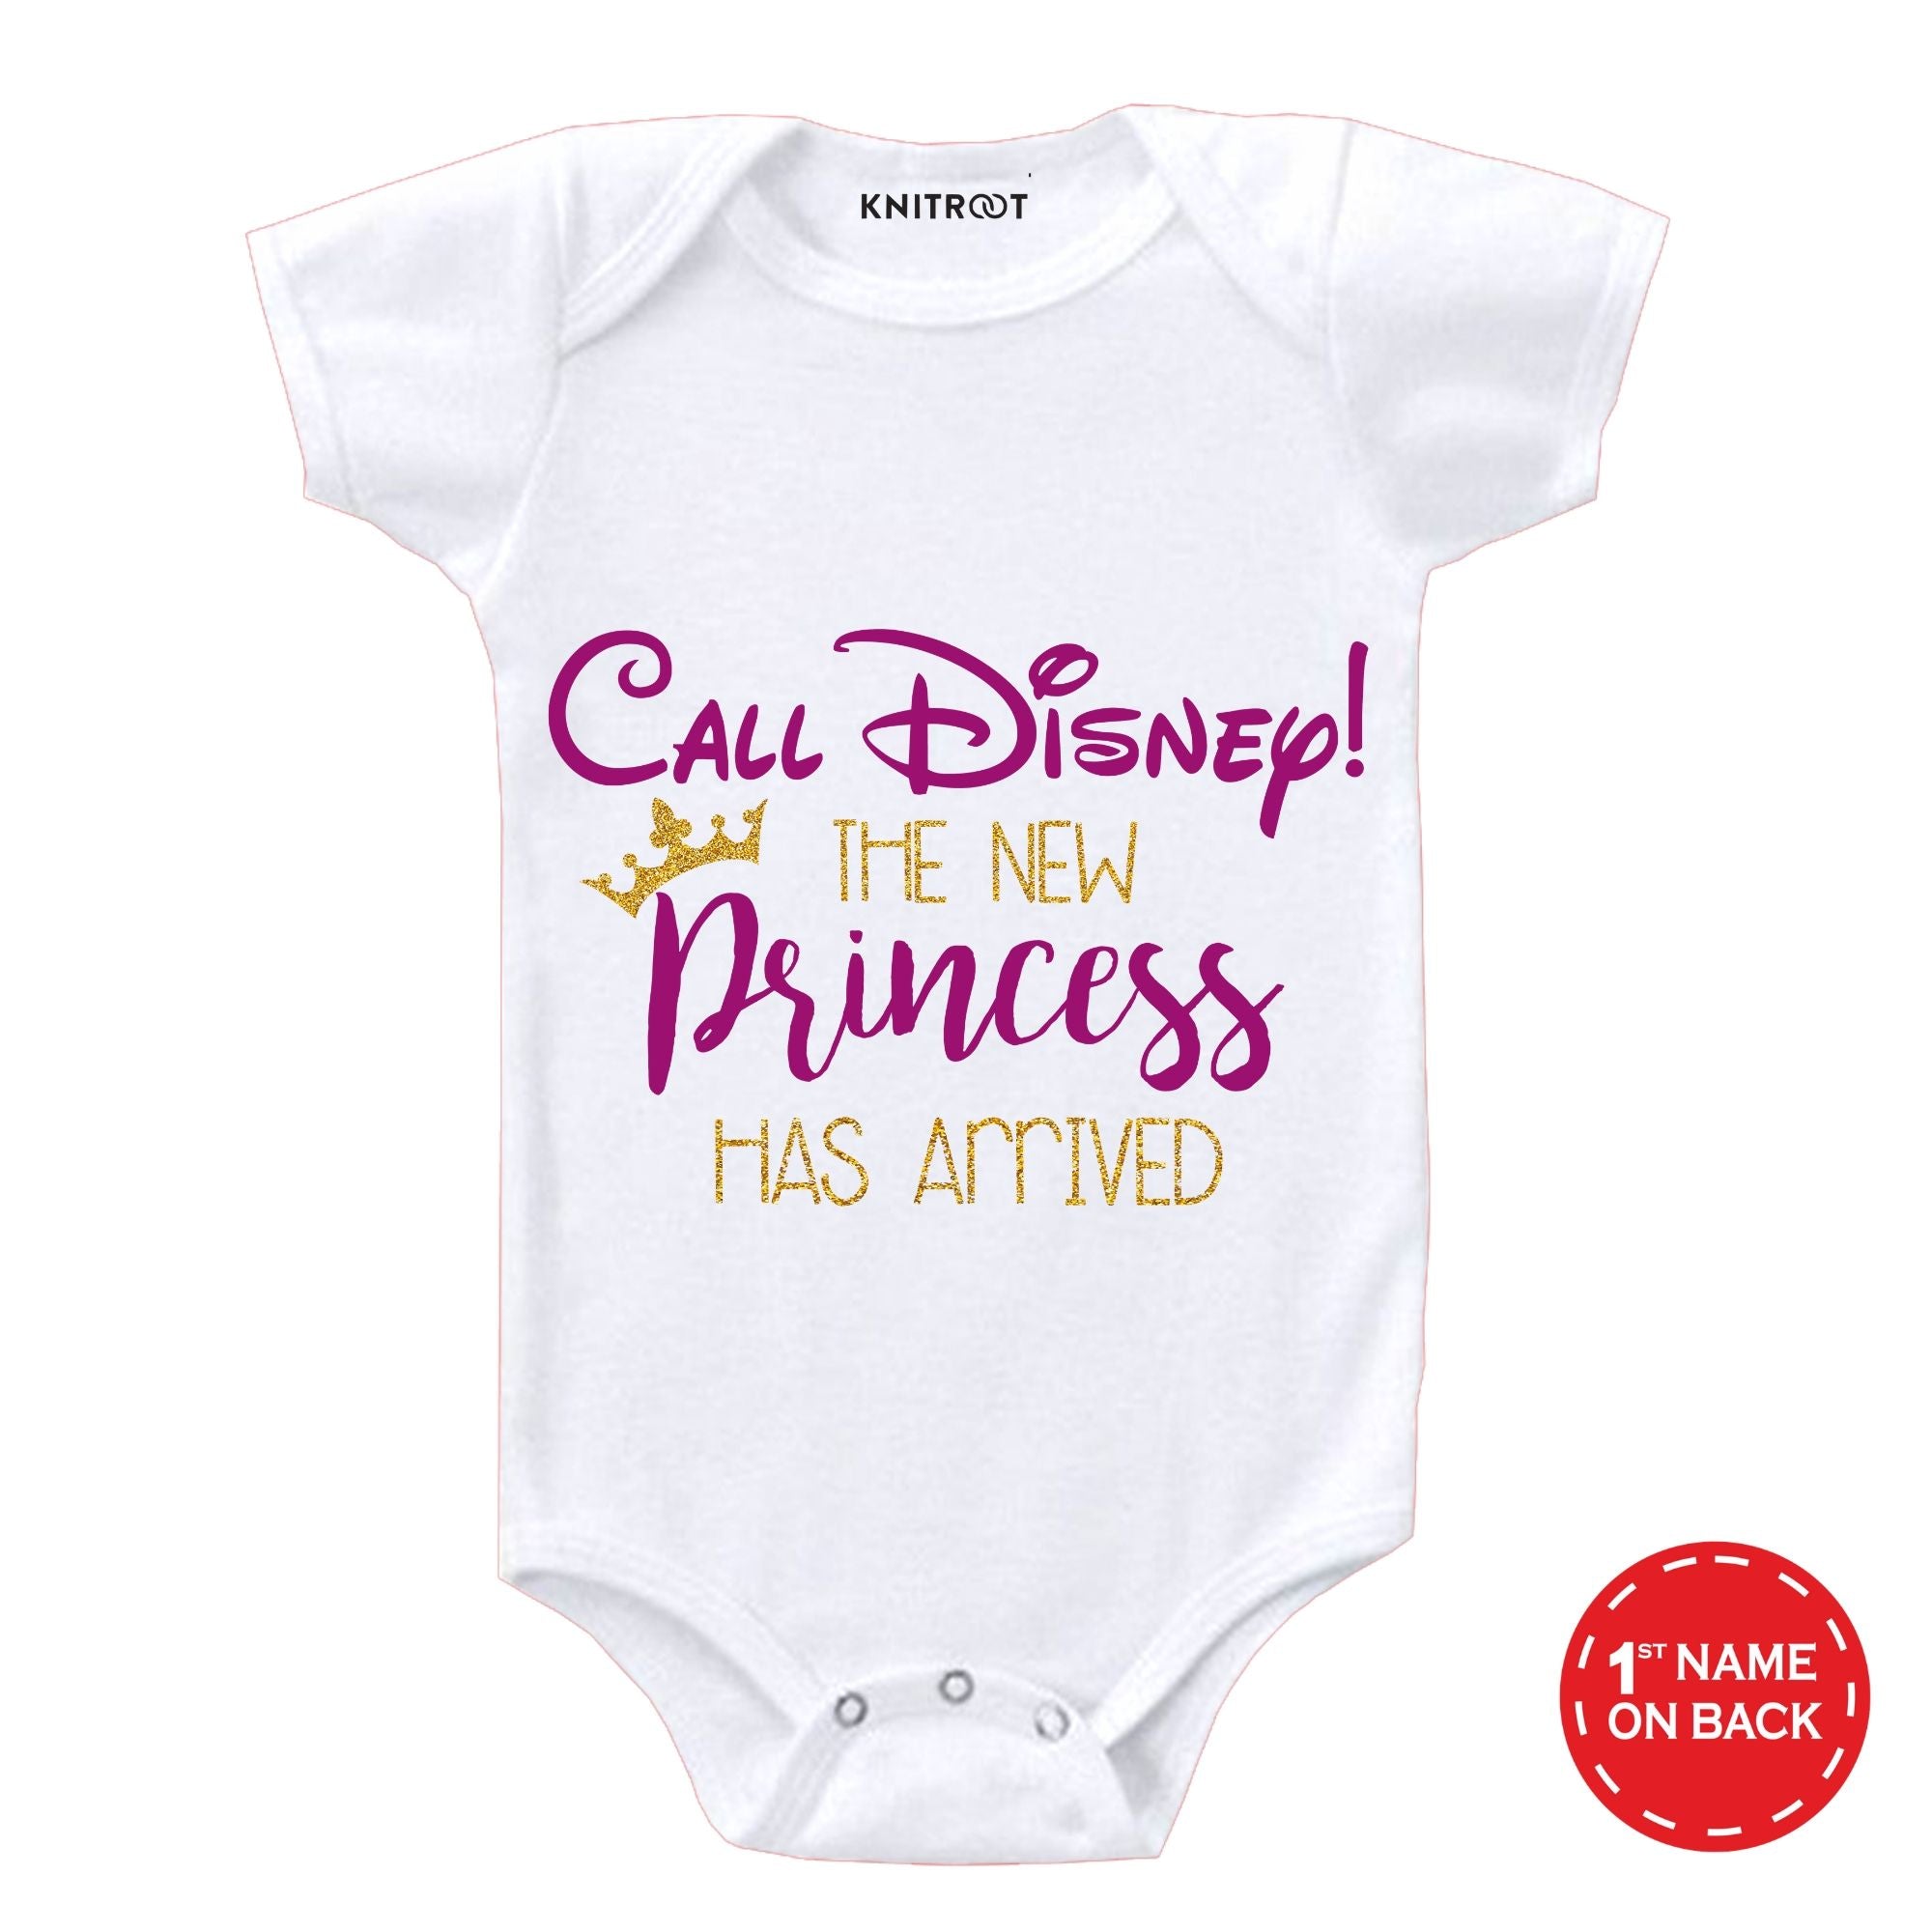 Call Disney! New Princess Has Arrived Onesie